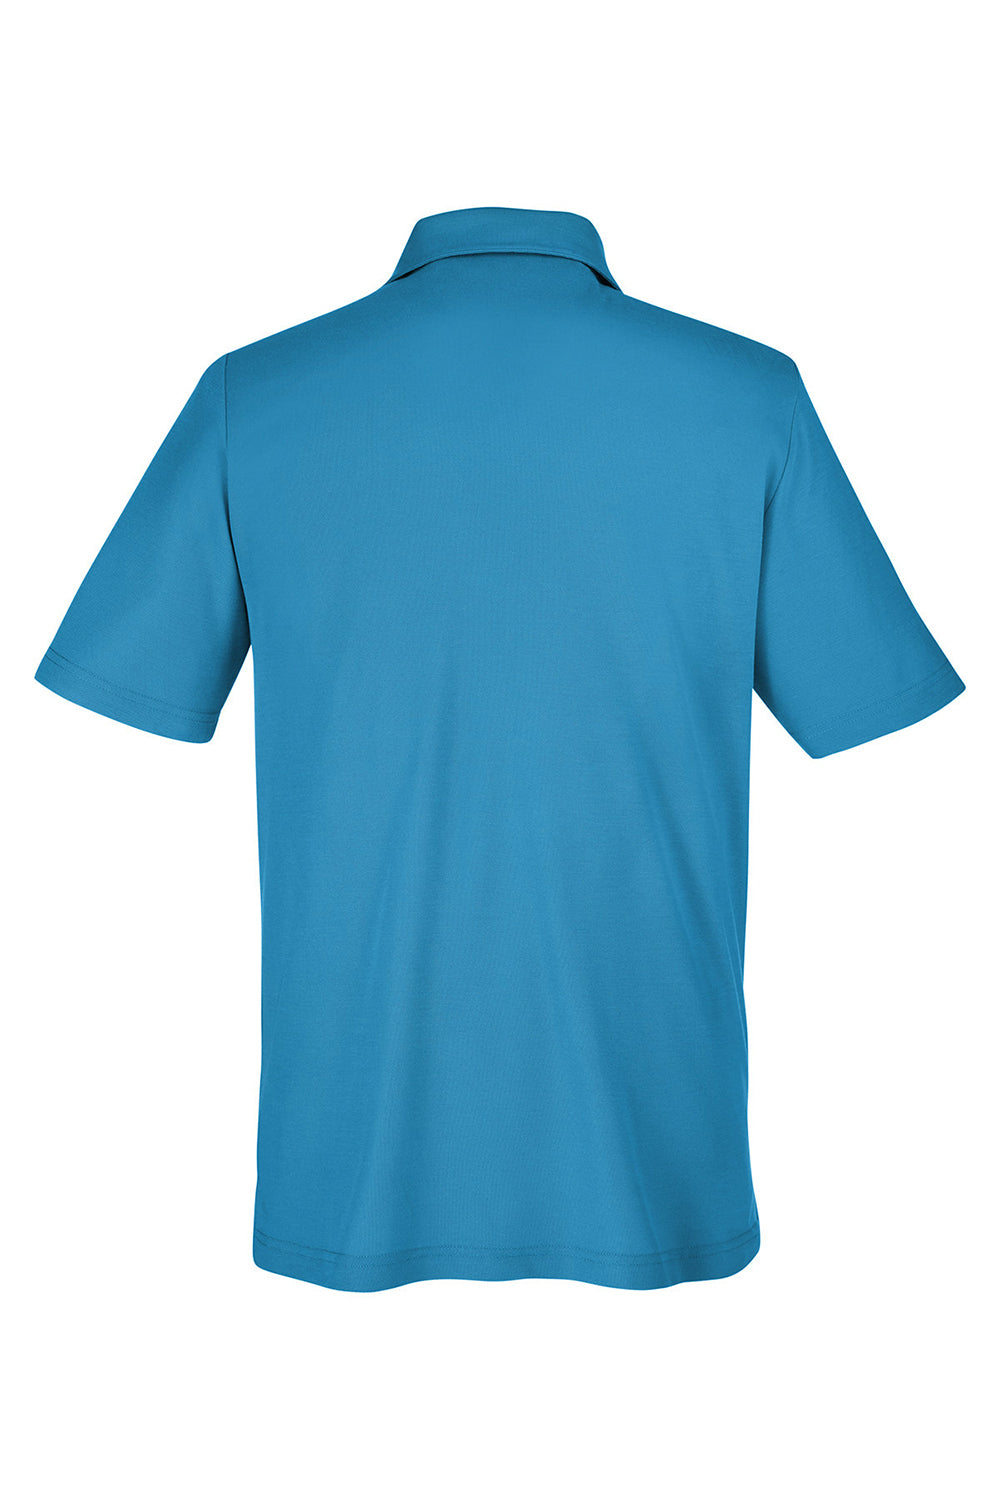 Core 365 CE112 Mens Fusion ChromaSoft Performance Moisture Wicking Short Sleeve Polo Shirt Electric Blue Flat Back